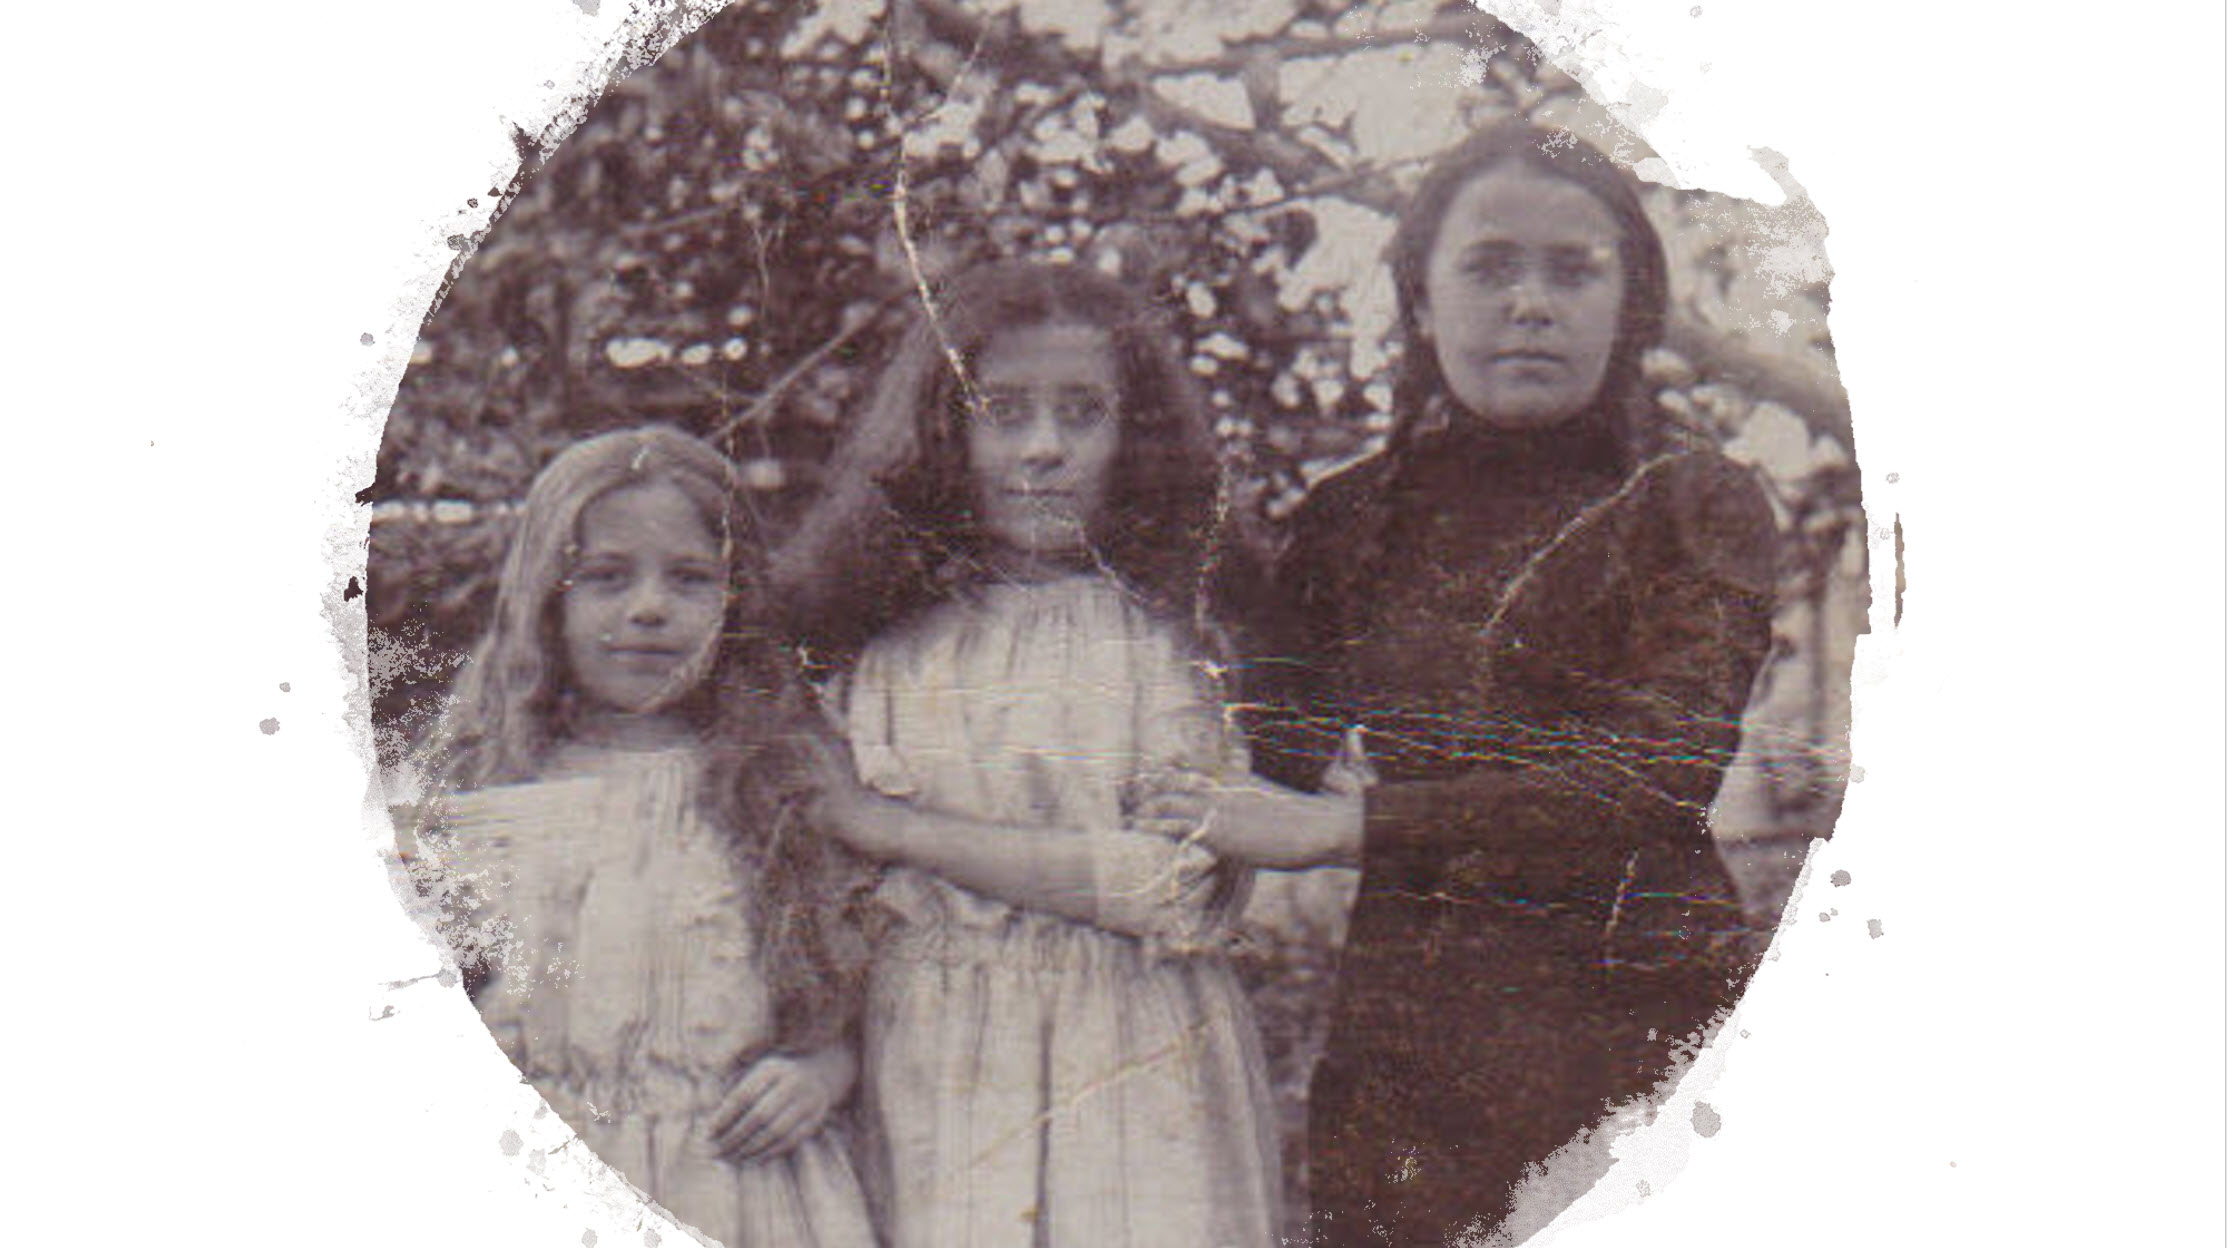 Sarah, Clara and Pepe Shulman in Mlynov